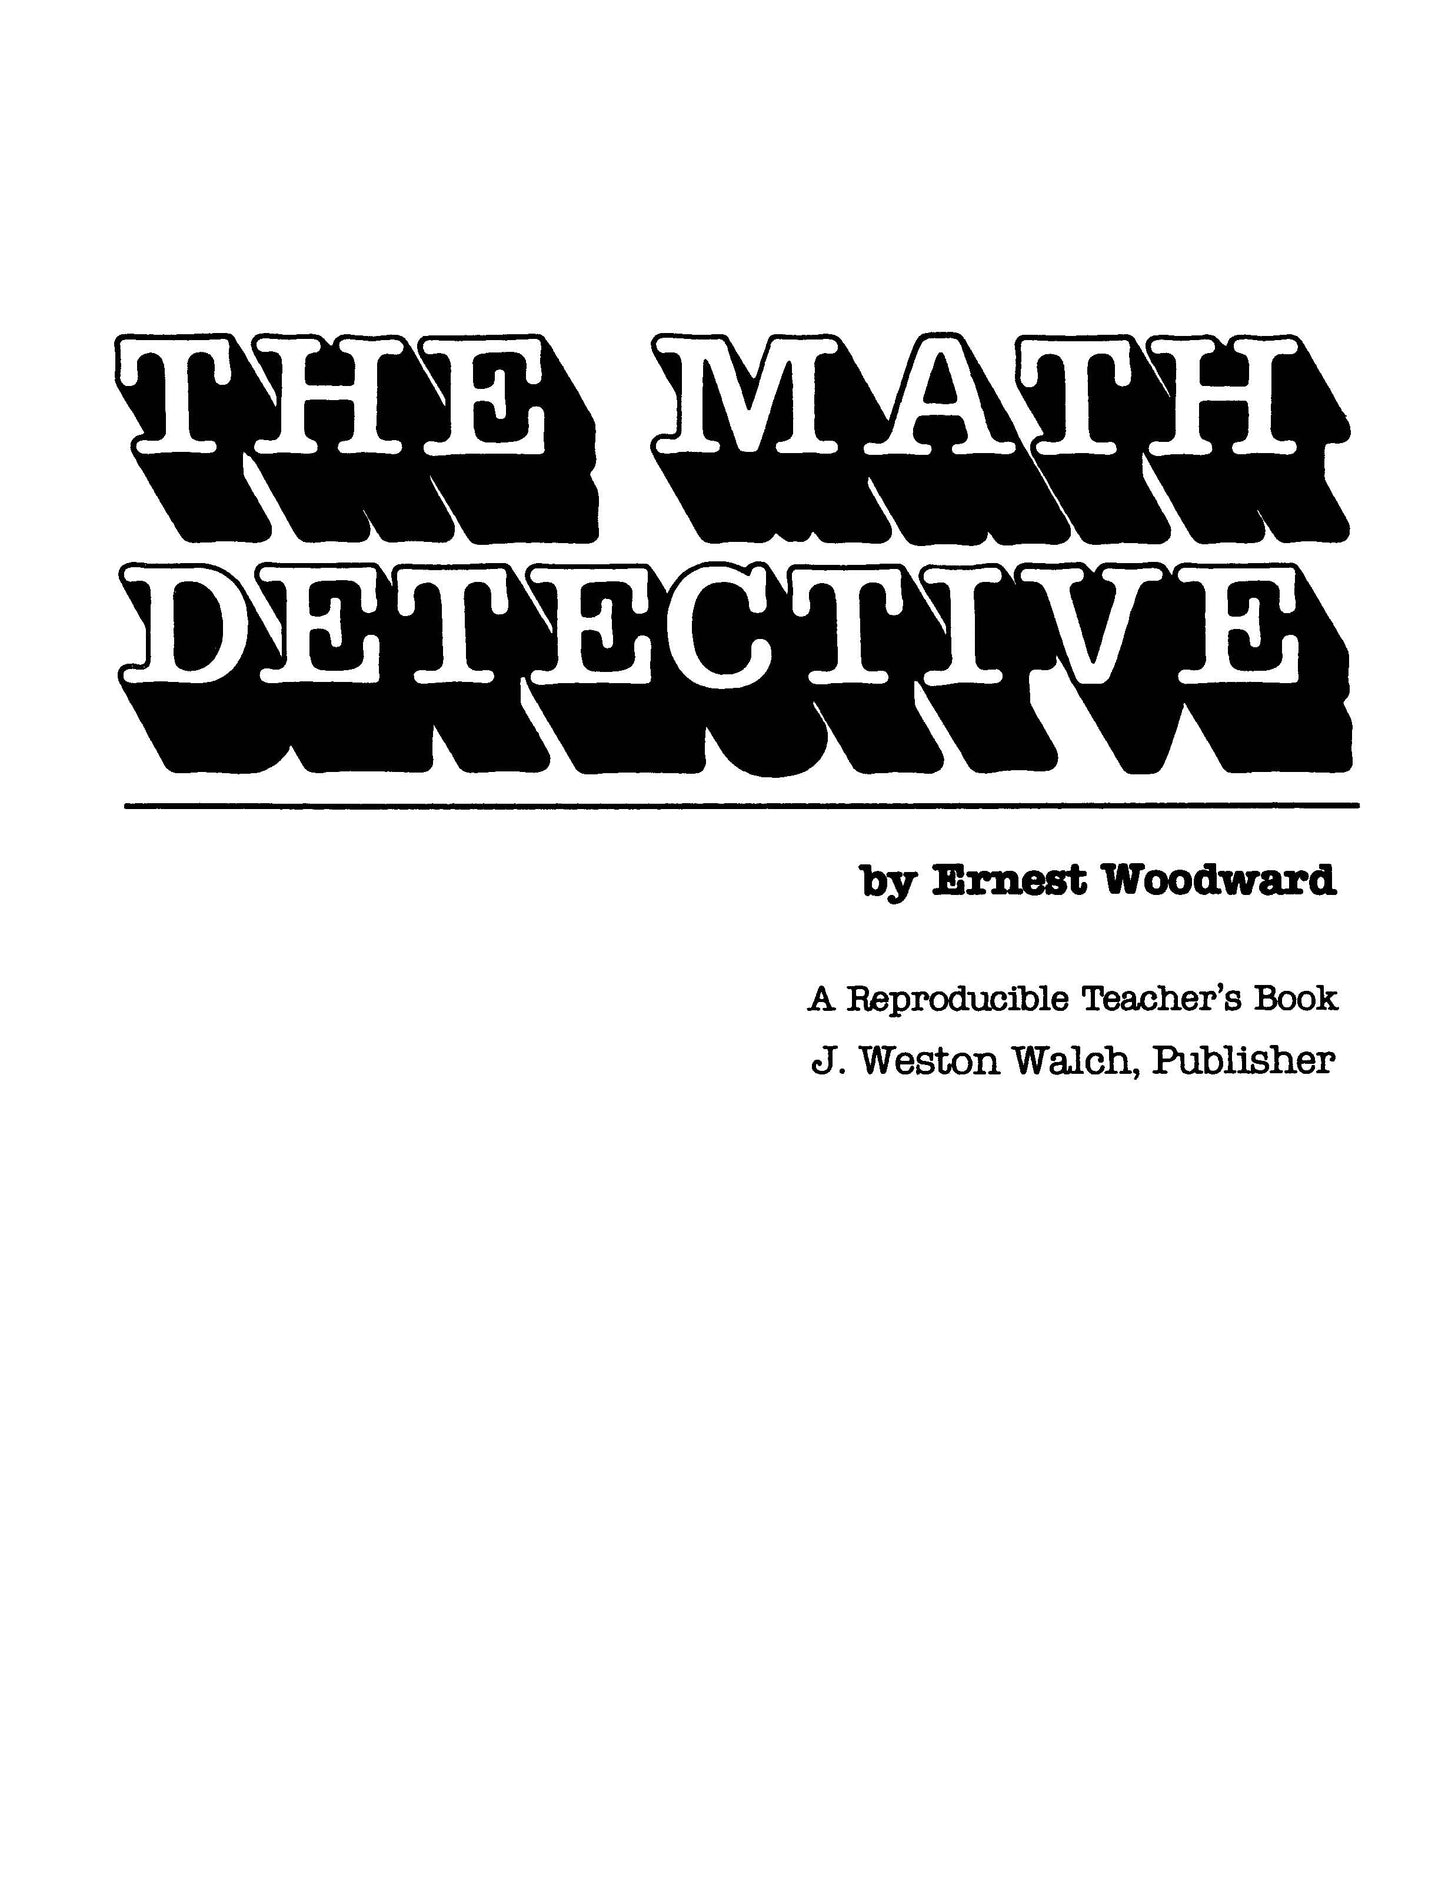 Bright Education Australia, Teacher Resources, Maths, Books, The Math Detective 